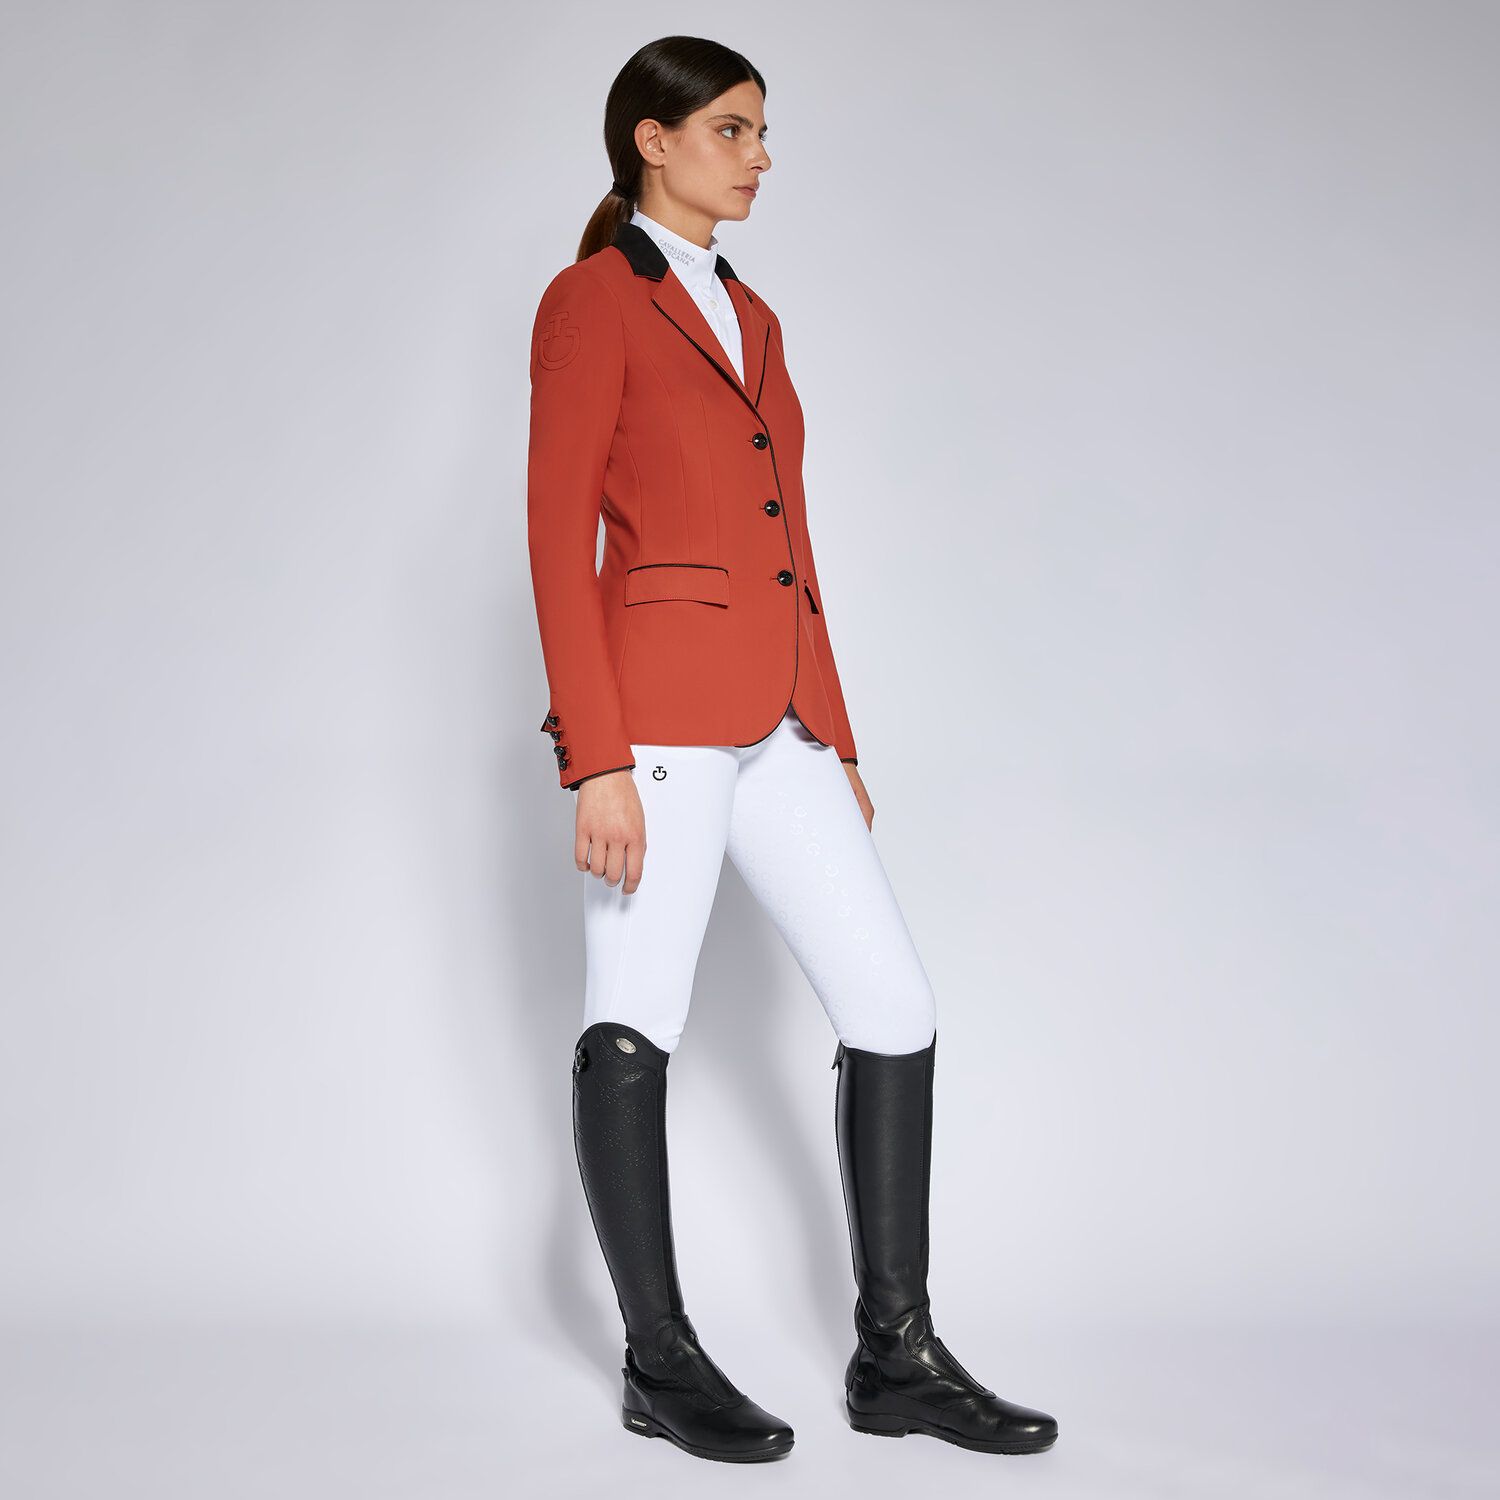 Cavalleria Toscana American Jersey Jacket ladies